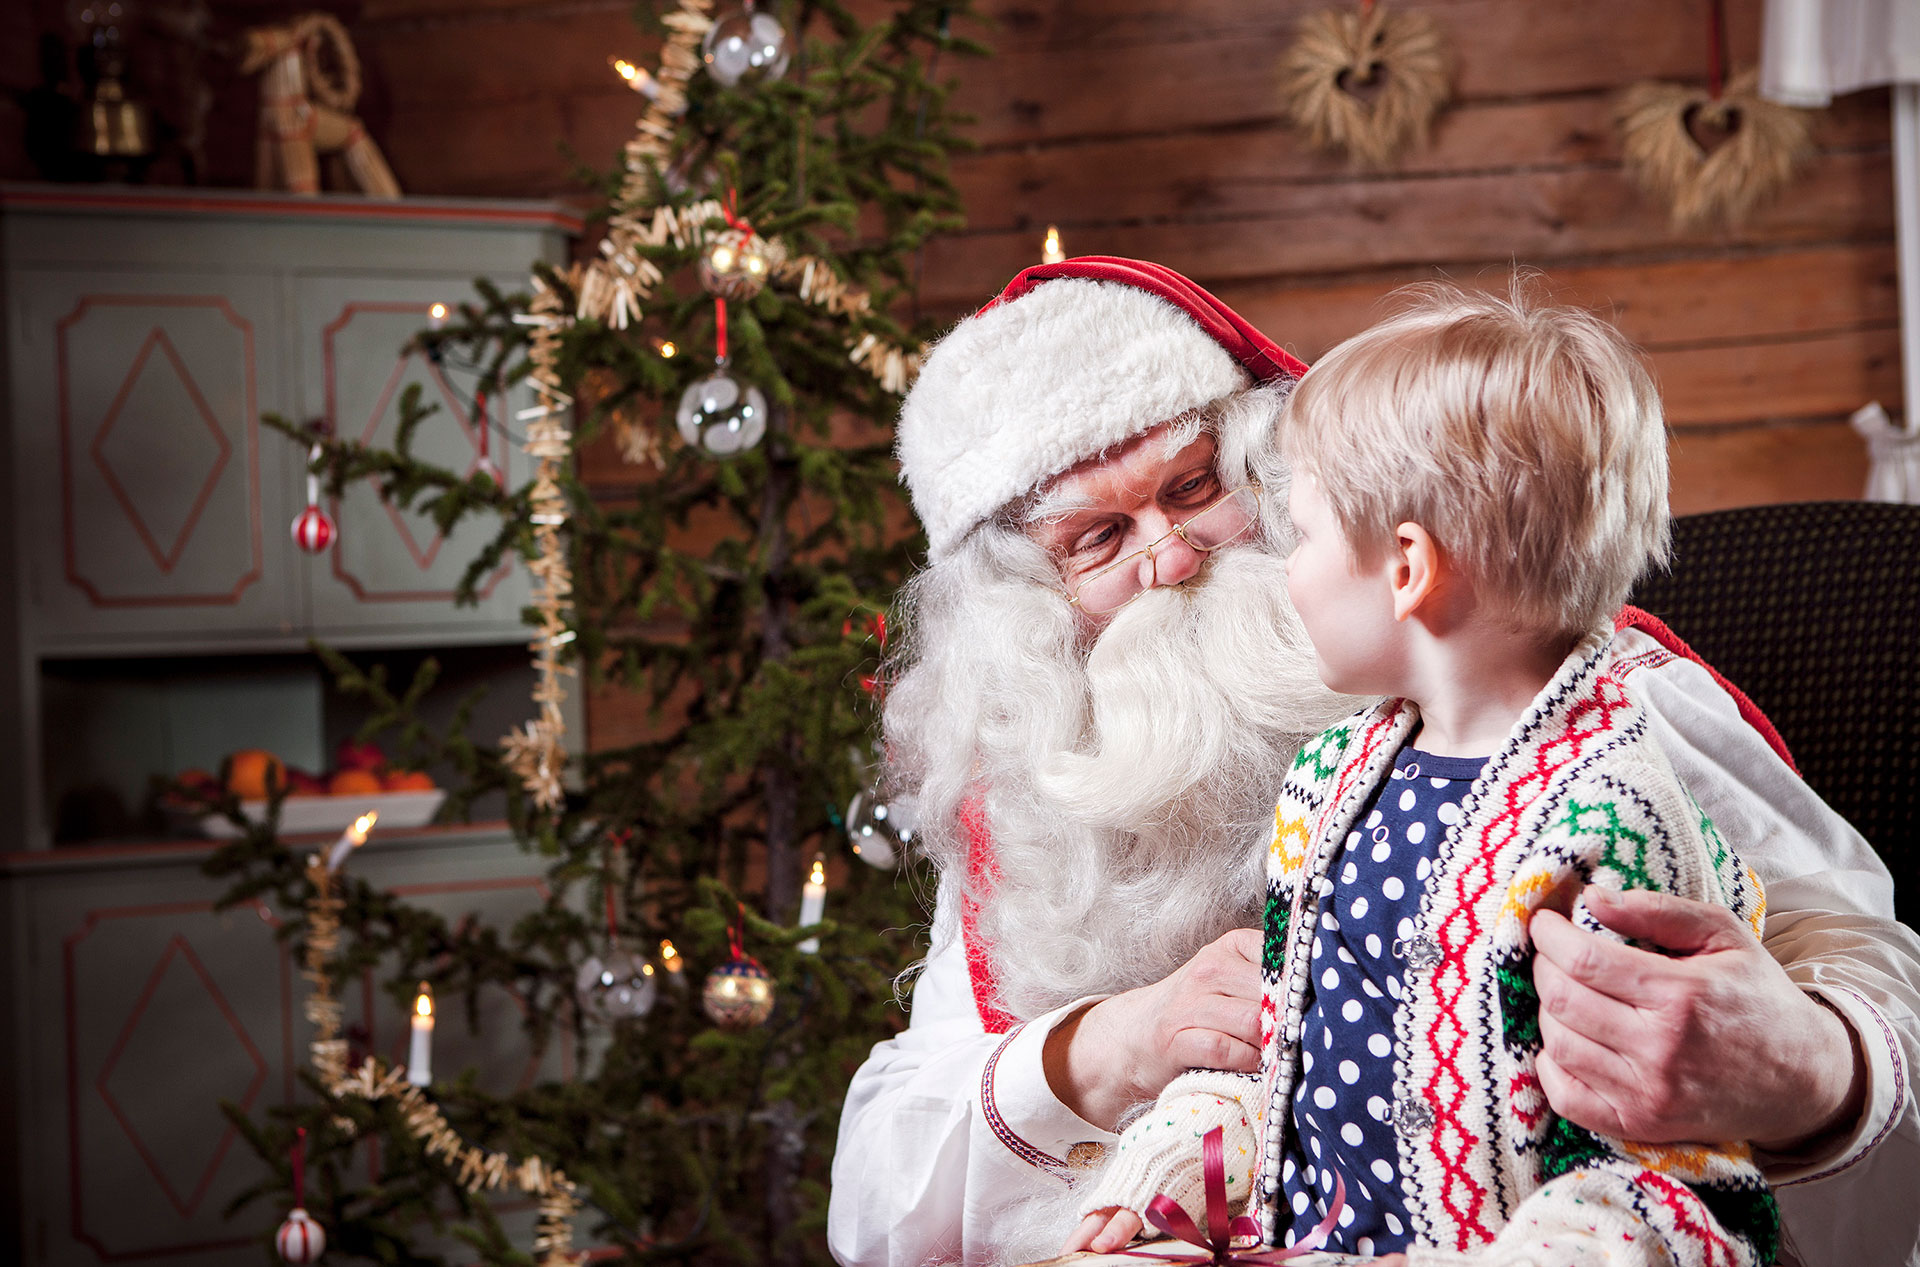 Santa Claus and the magic of Christmas in Rovaniemi - Visit Rovaniemi